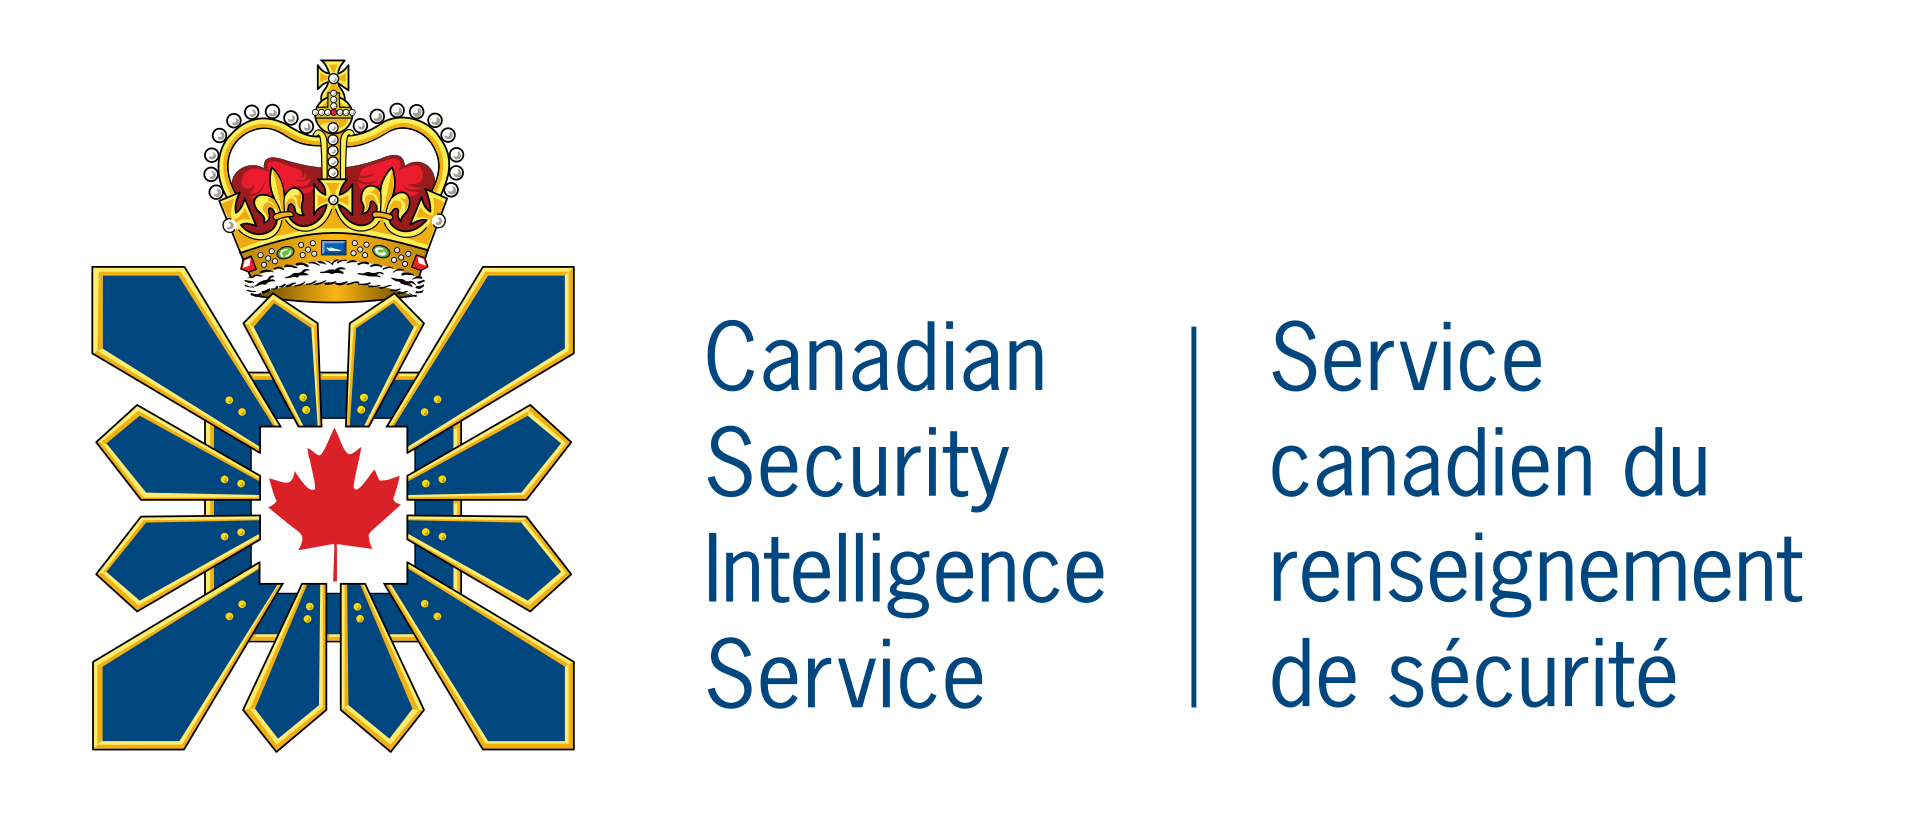 1920px-Canadian_Security_Intelligence_Service_logo.svg.png